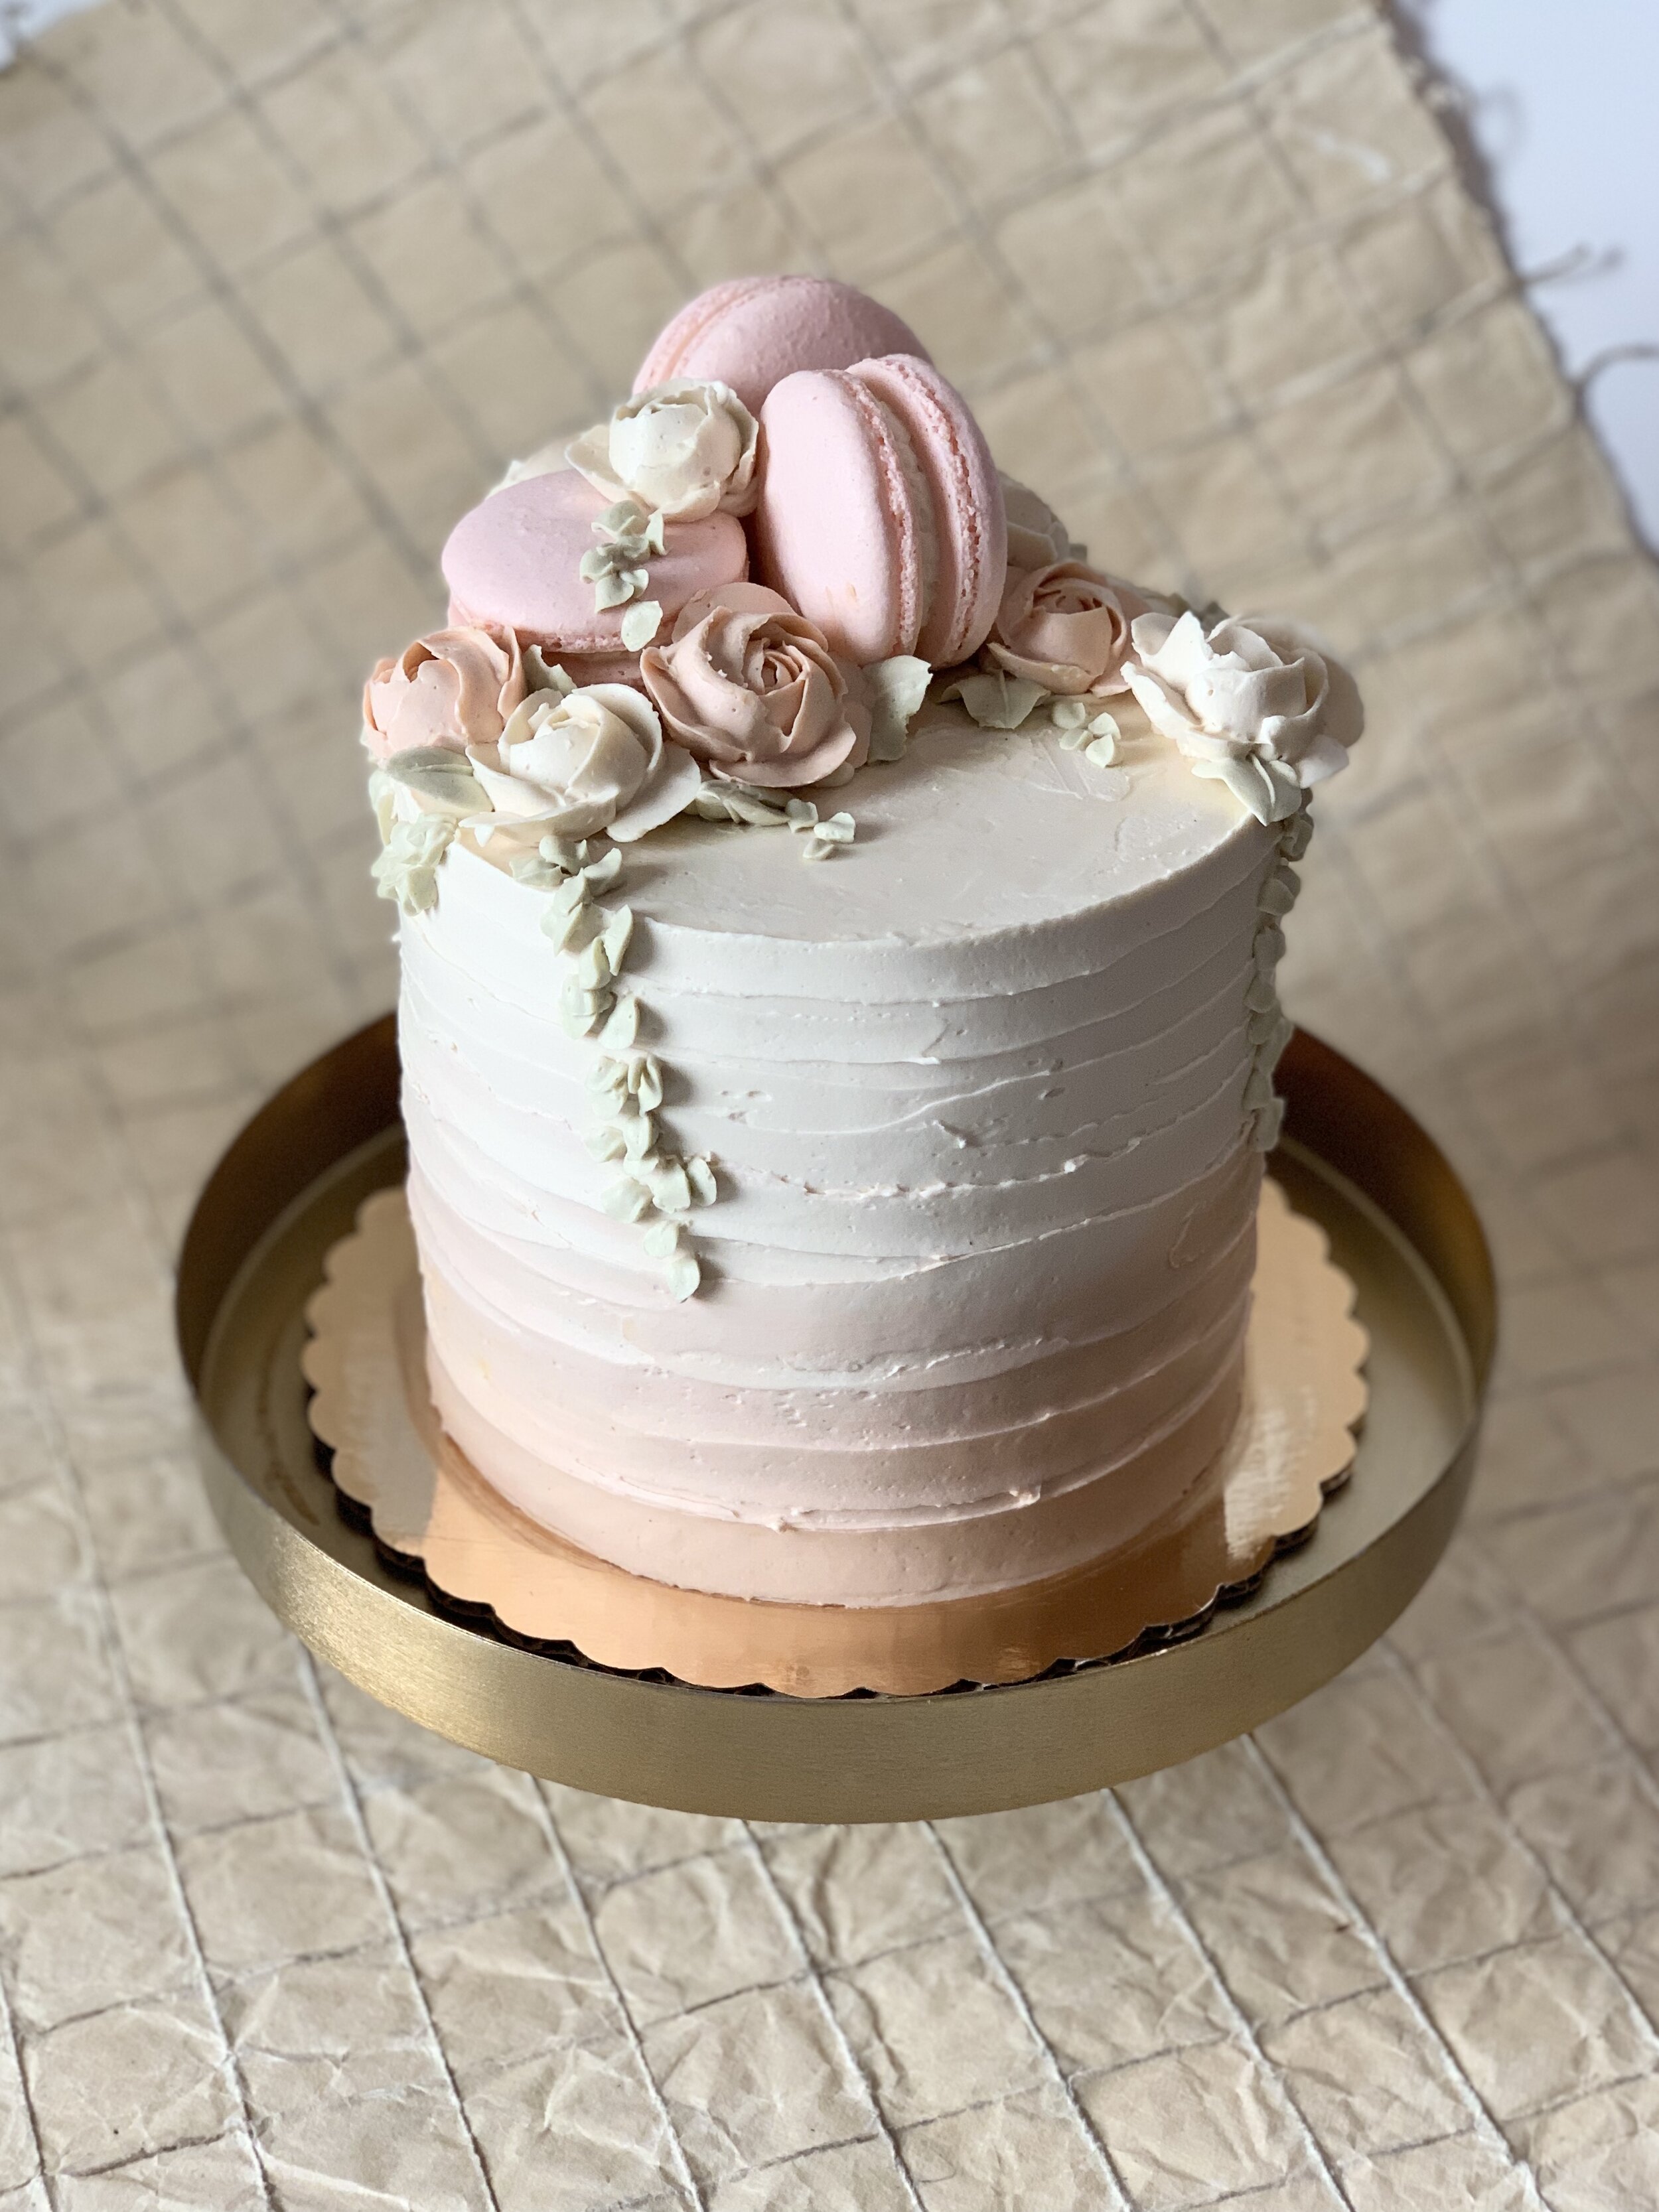 Birthday Cake Macarons: Recipe & Step by Step Tutorial